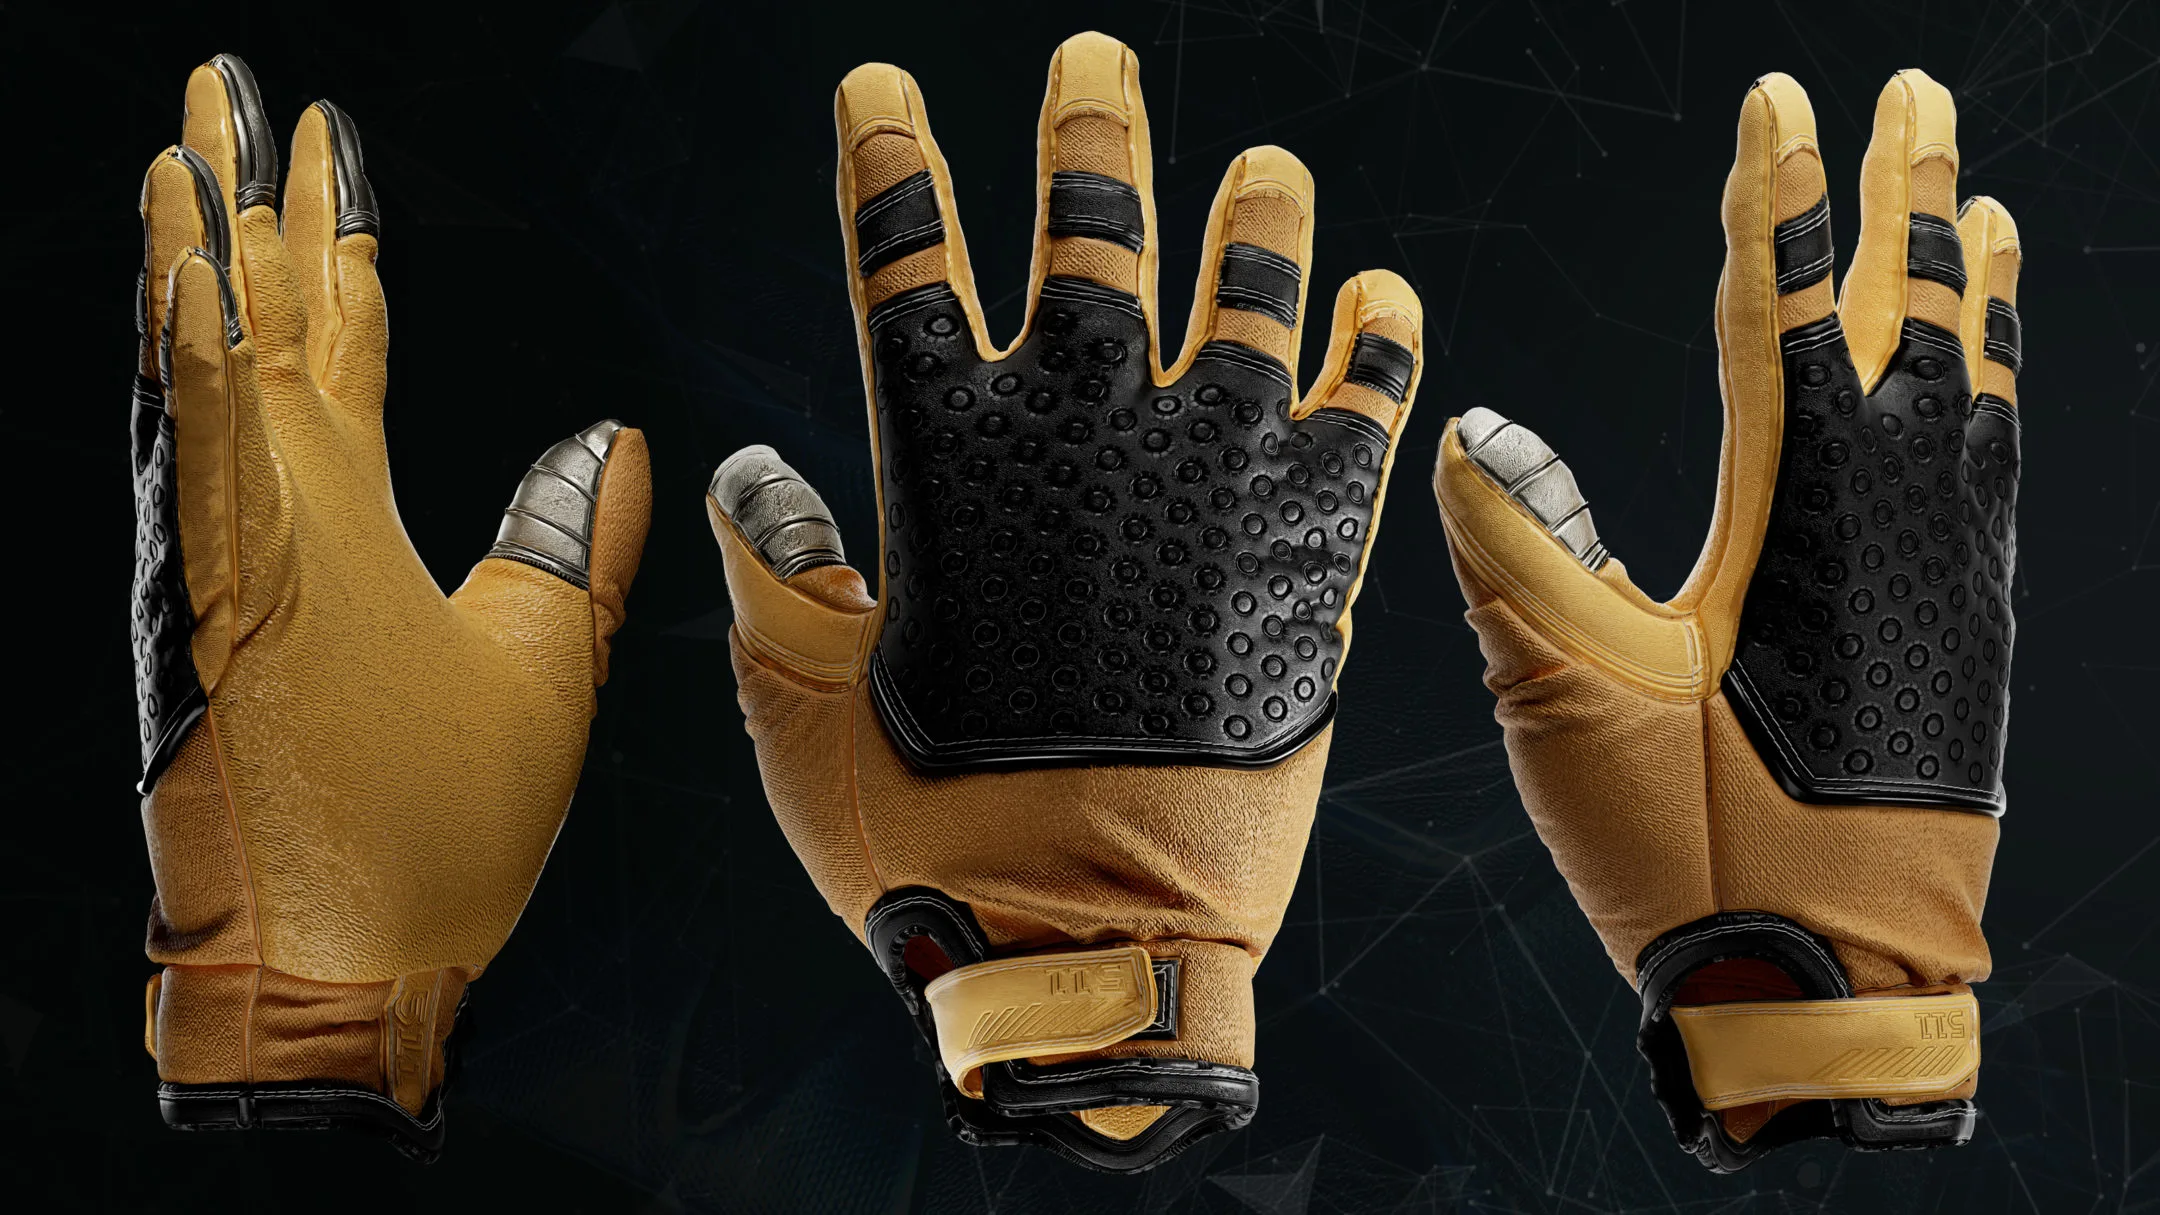 5 Tactical Gloves_MD/CLO3D (zprj) + obj,fbx_VOL01